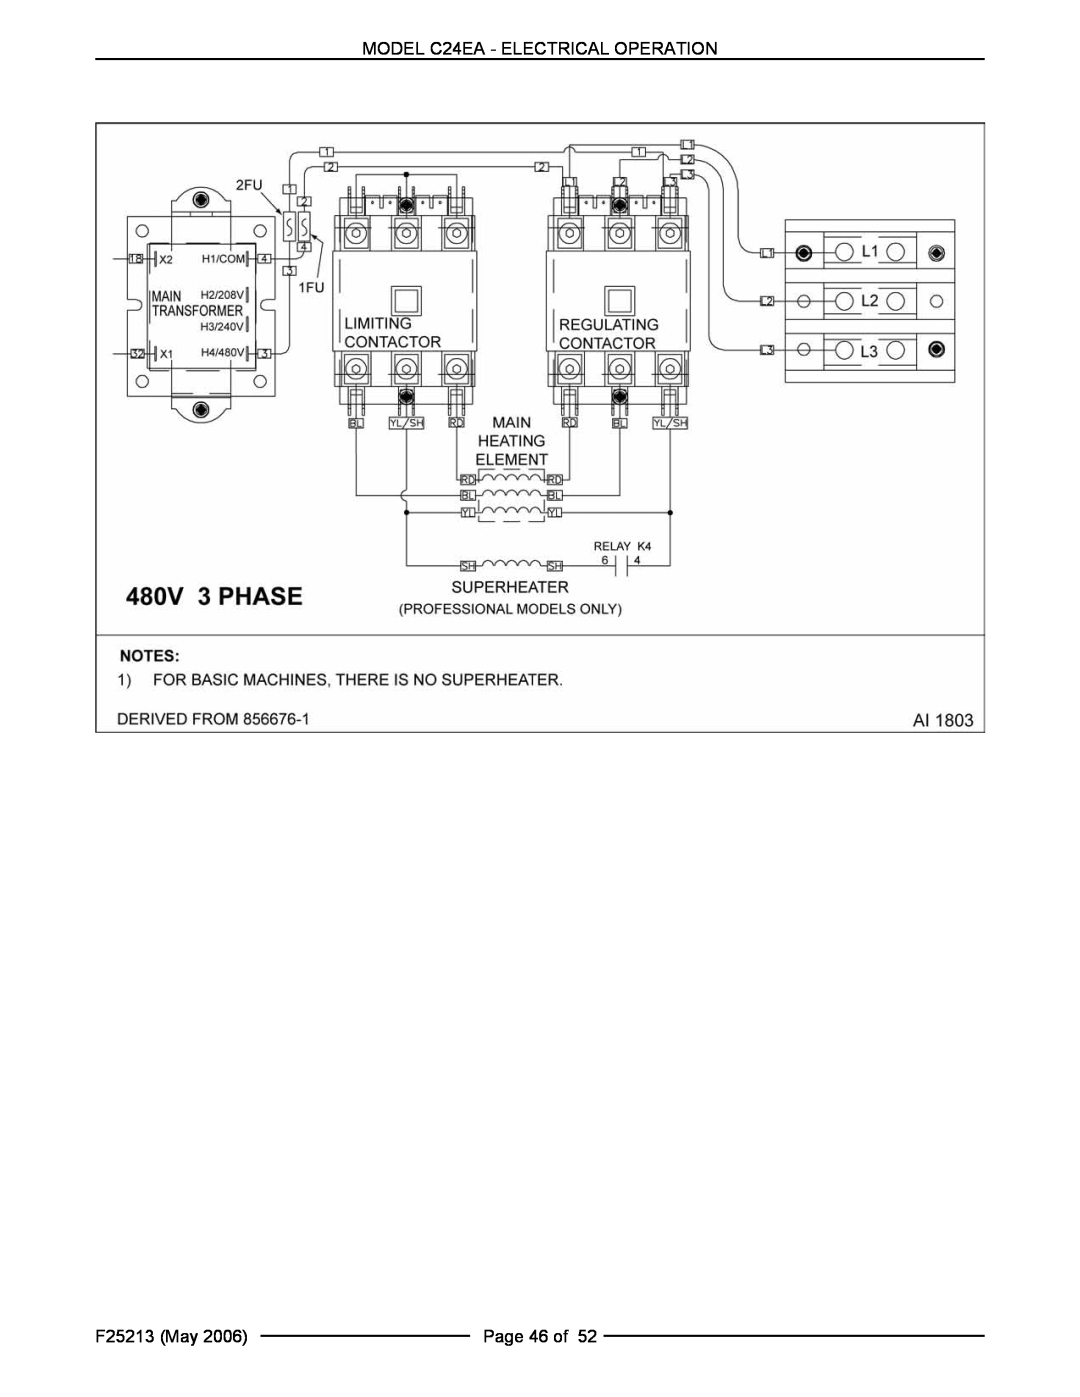 Vulcan-Hart C24EA3 480V BASIC, C24EA5 480V BASIC service manual MODEL C24EA - ELECTRICAL OPERATION, F25213 May, Page 46 of 